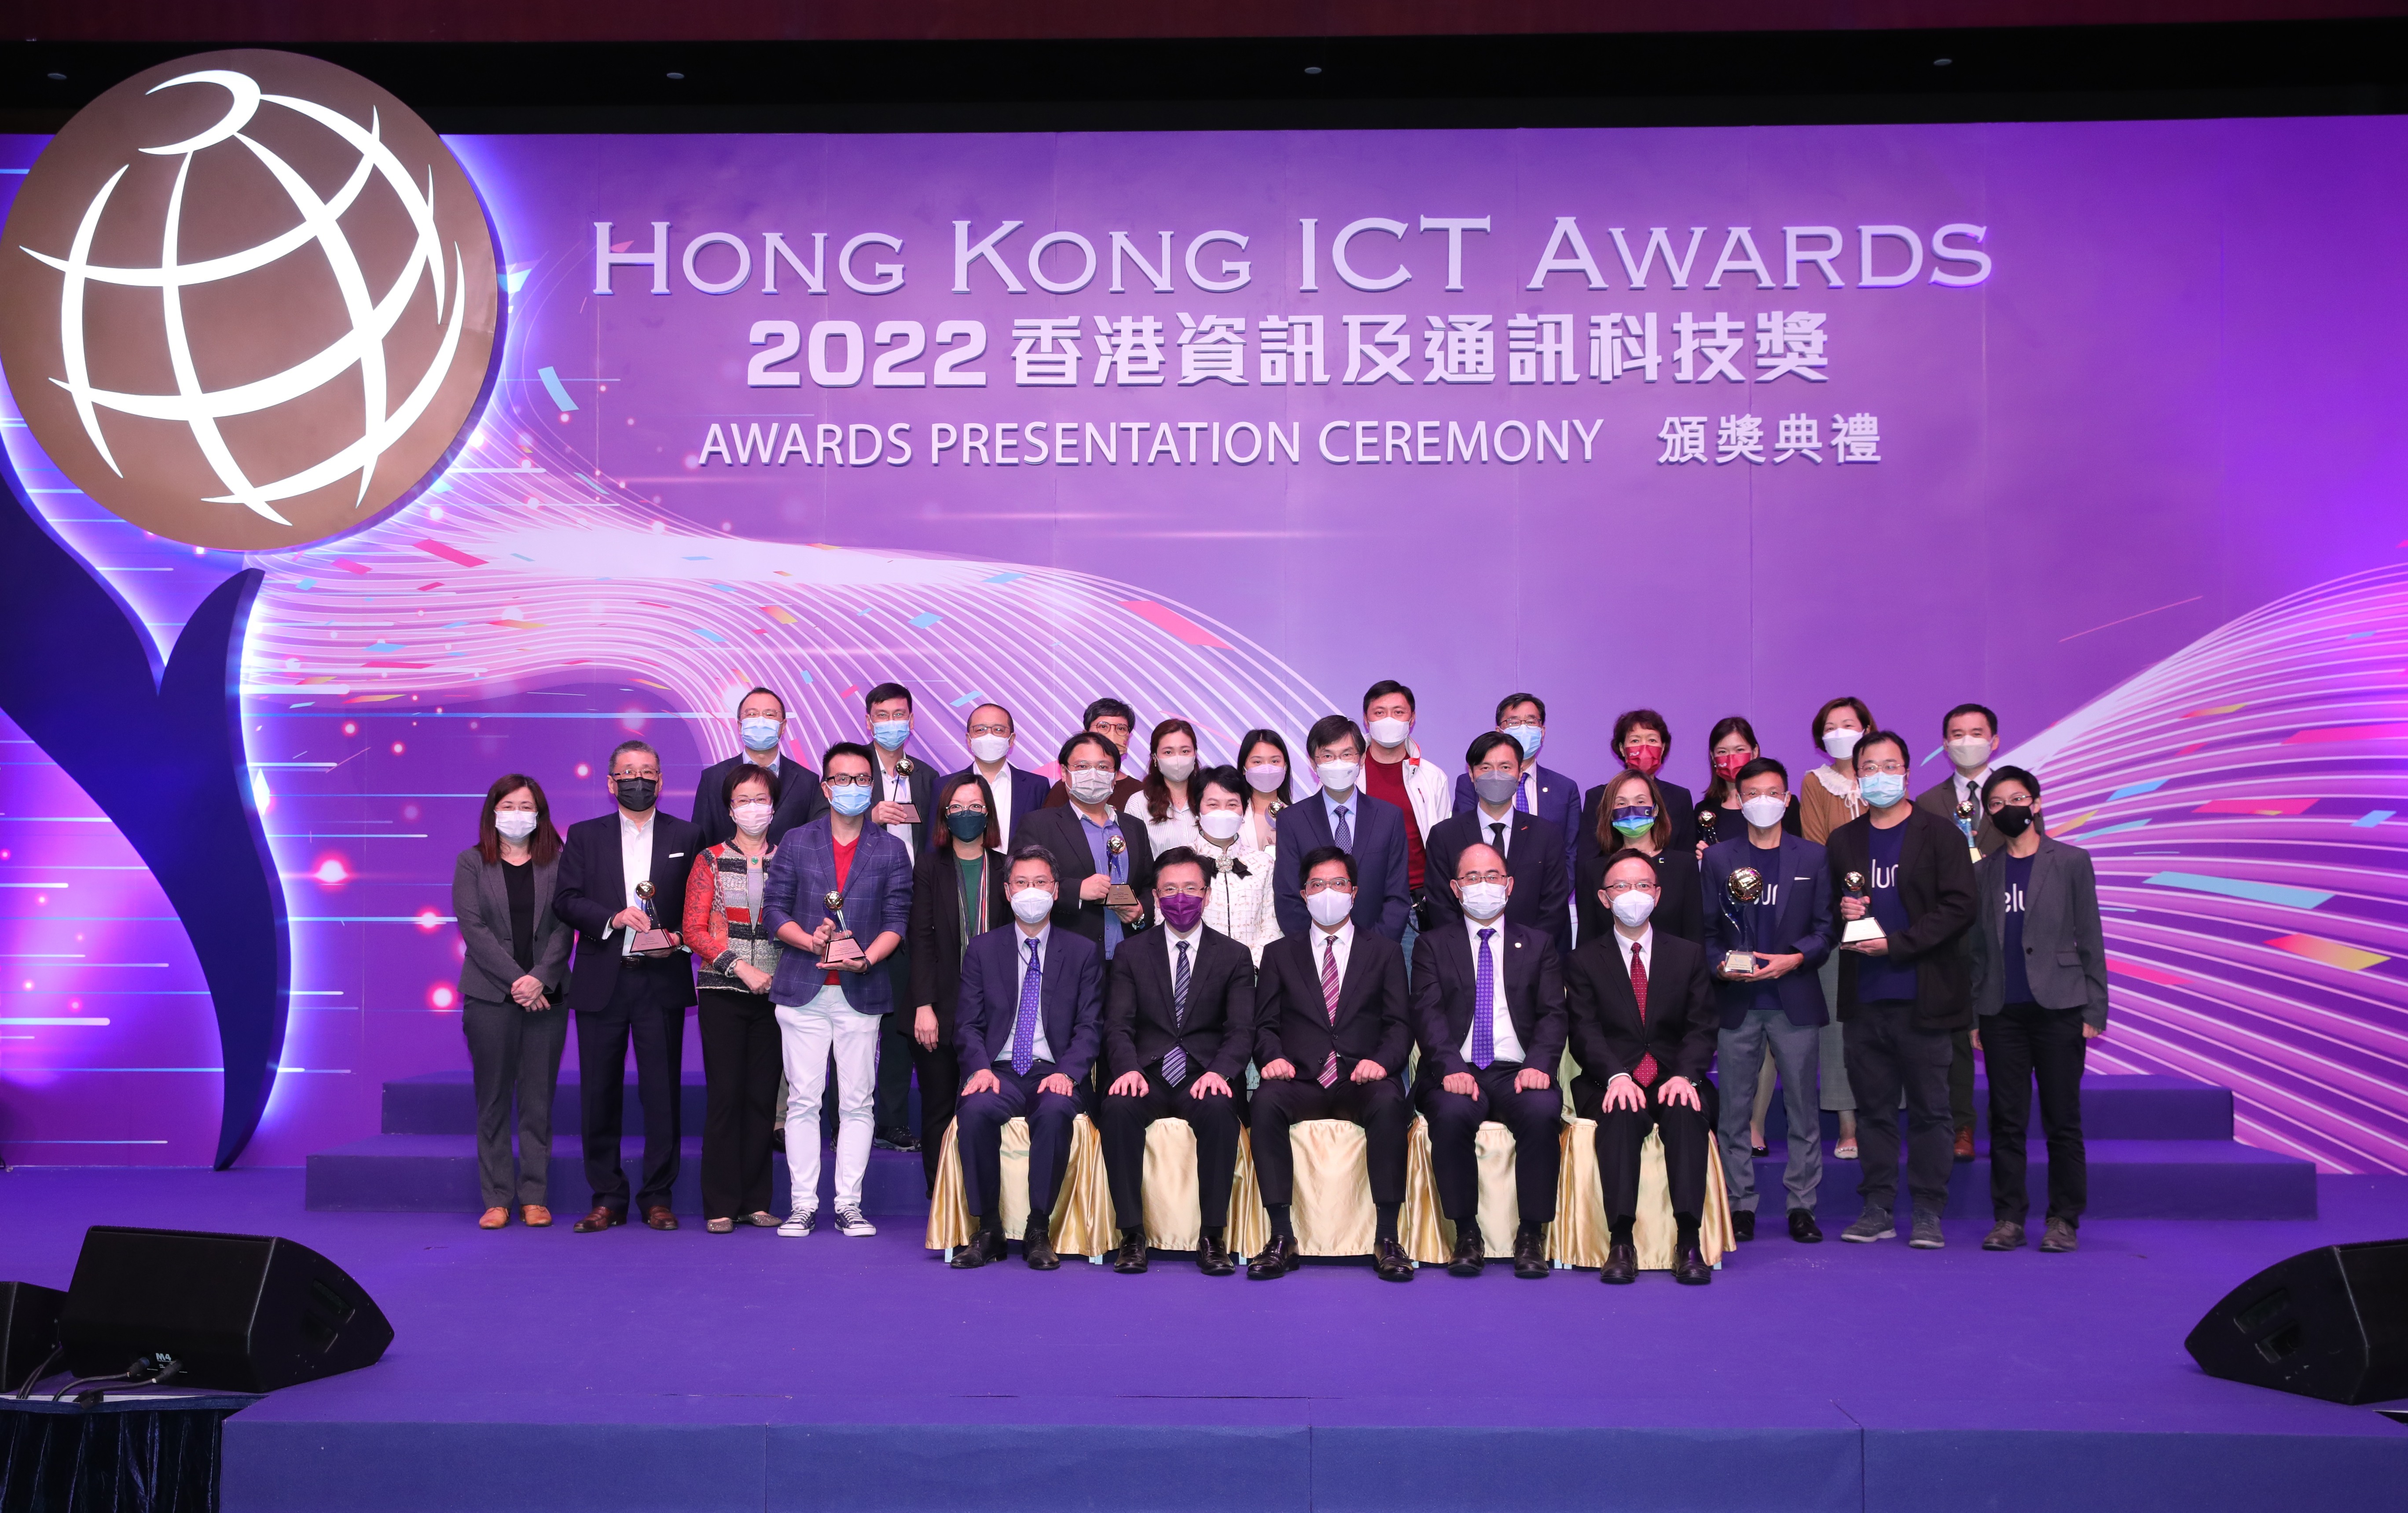 Hong Kong ICT Awards 2022 Smart People Award Winners Group Photo